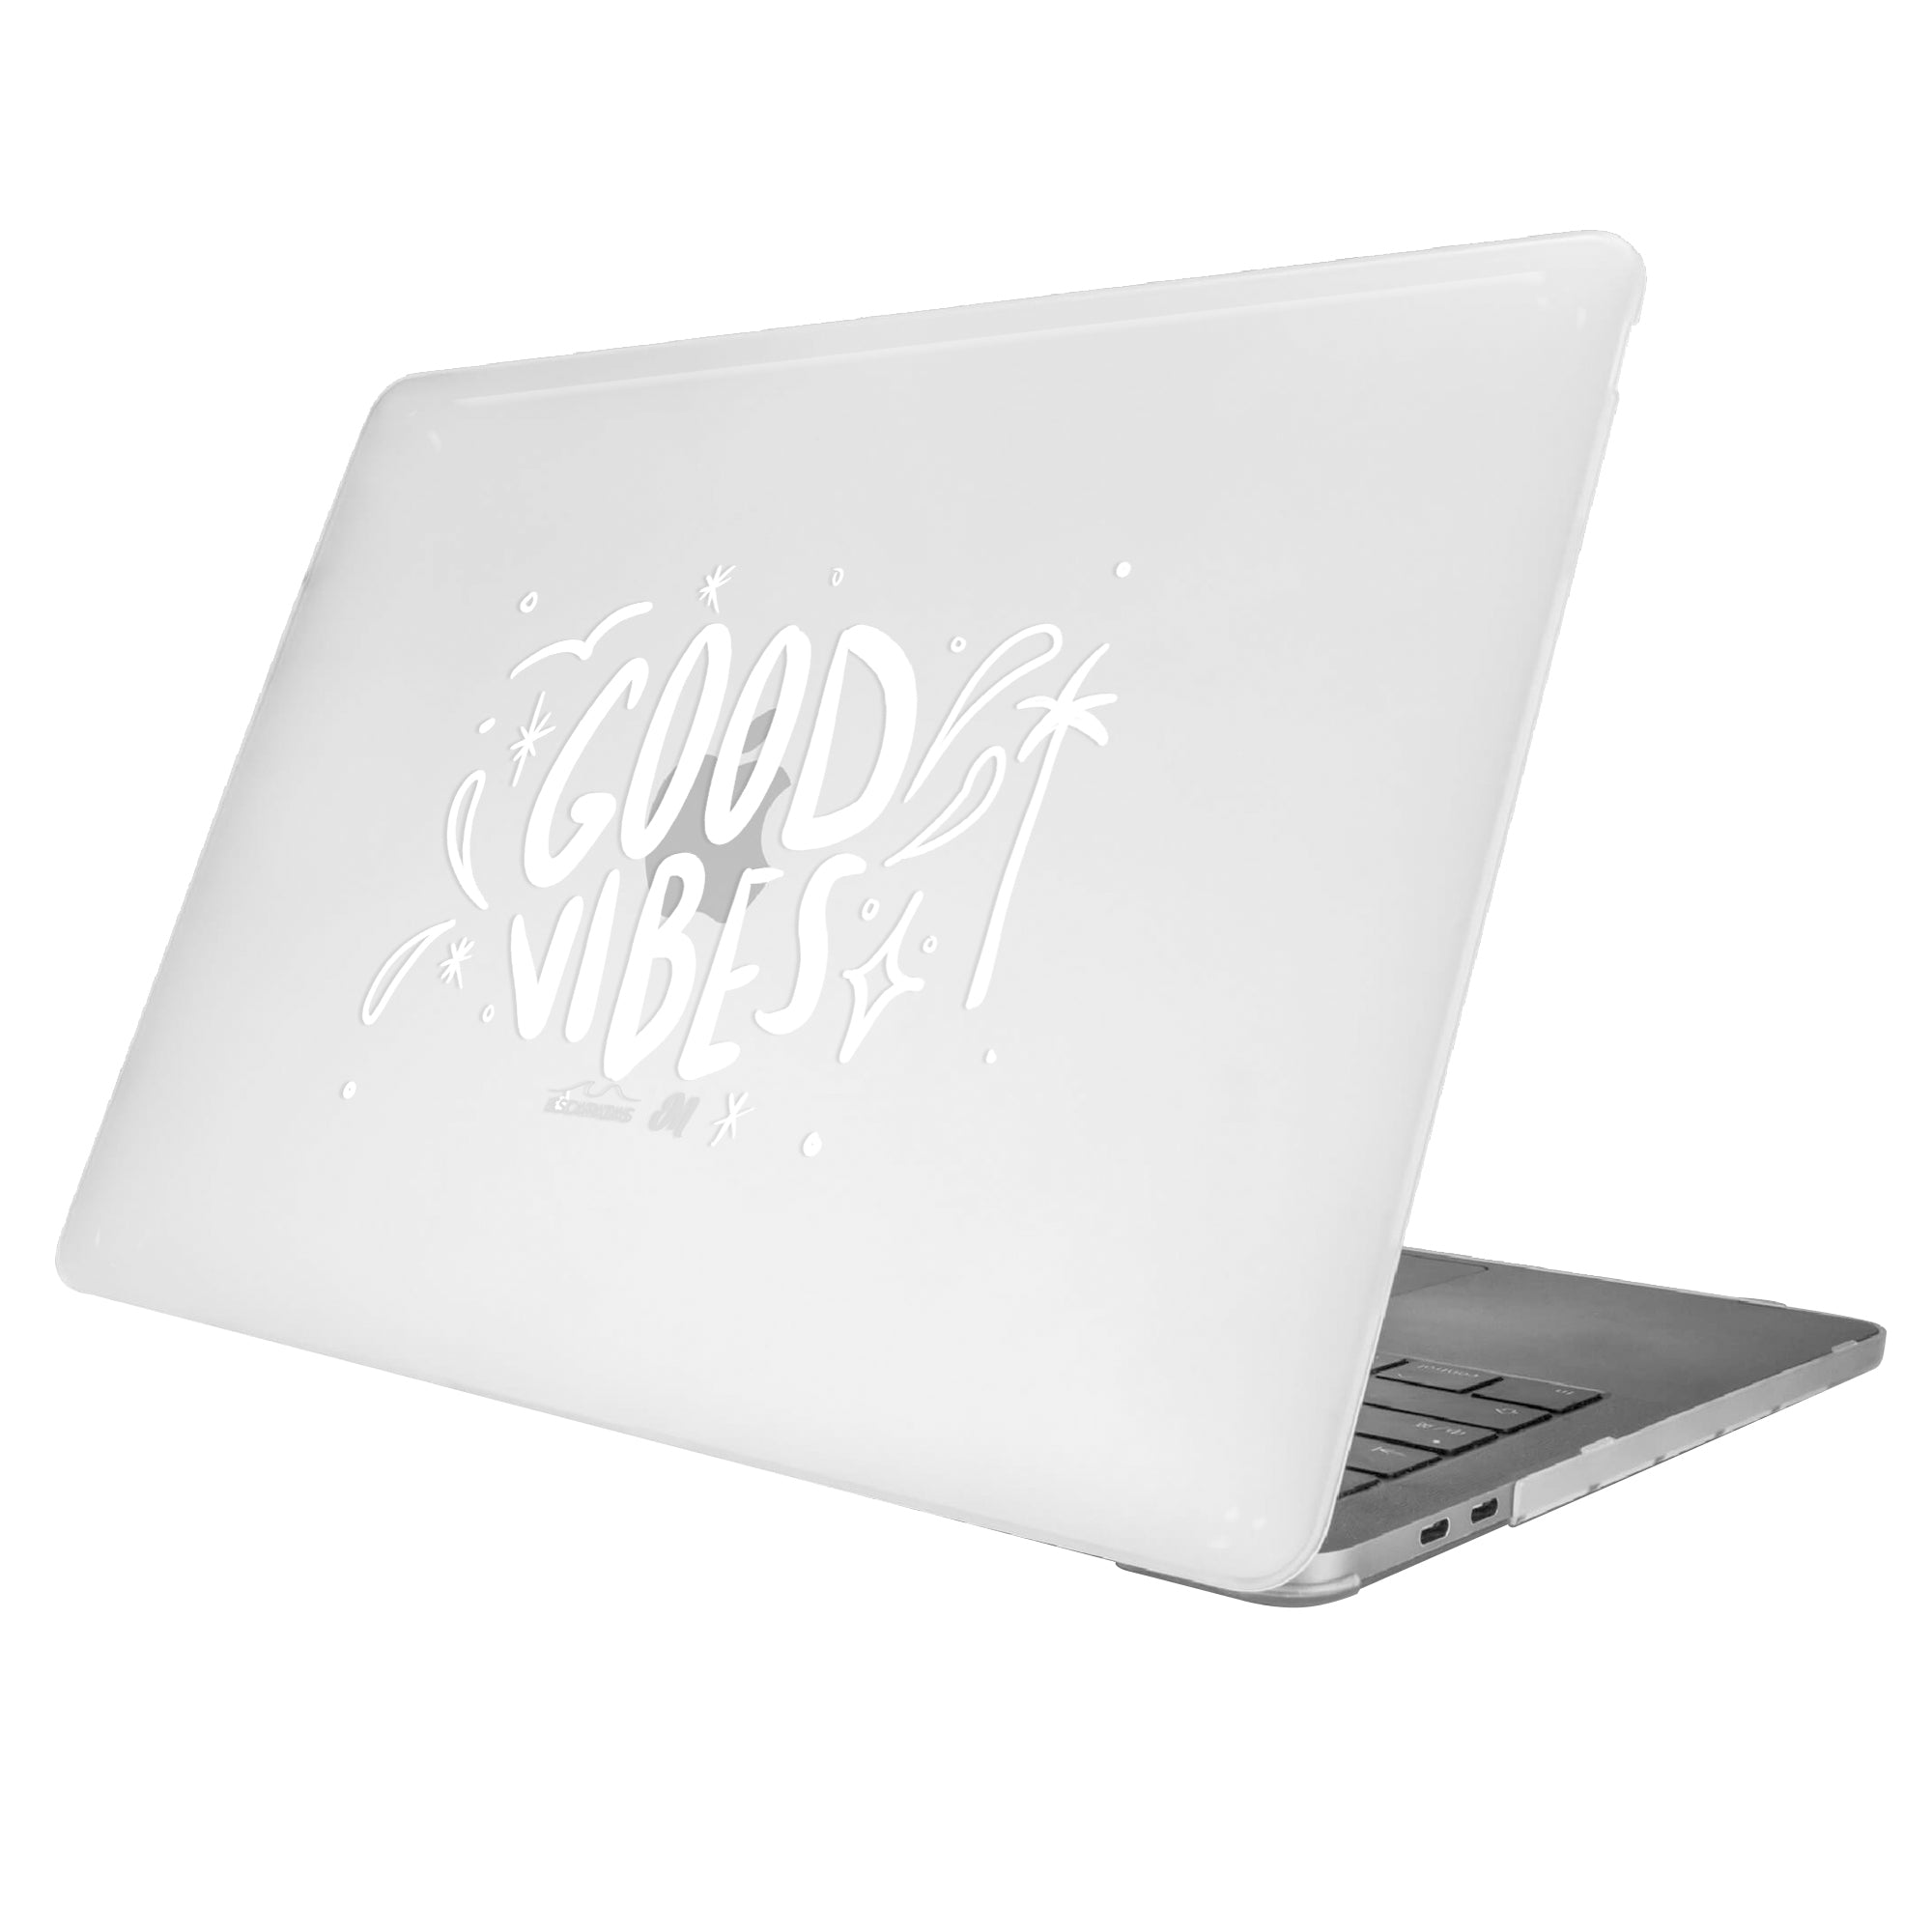 Good Vibes MacBook Case - Mandala Cases